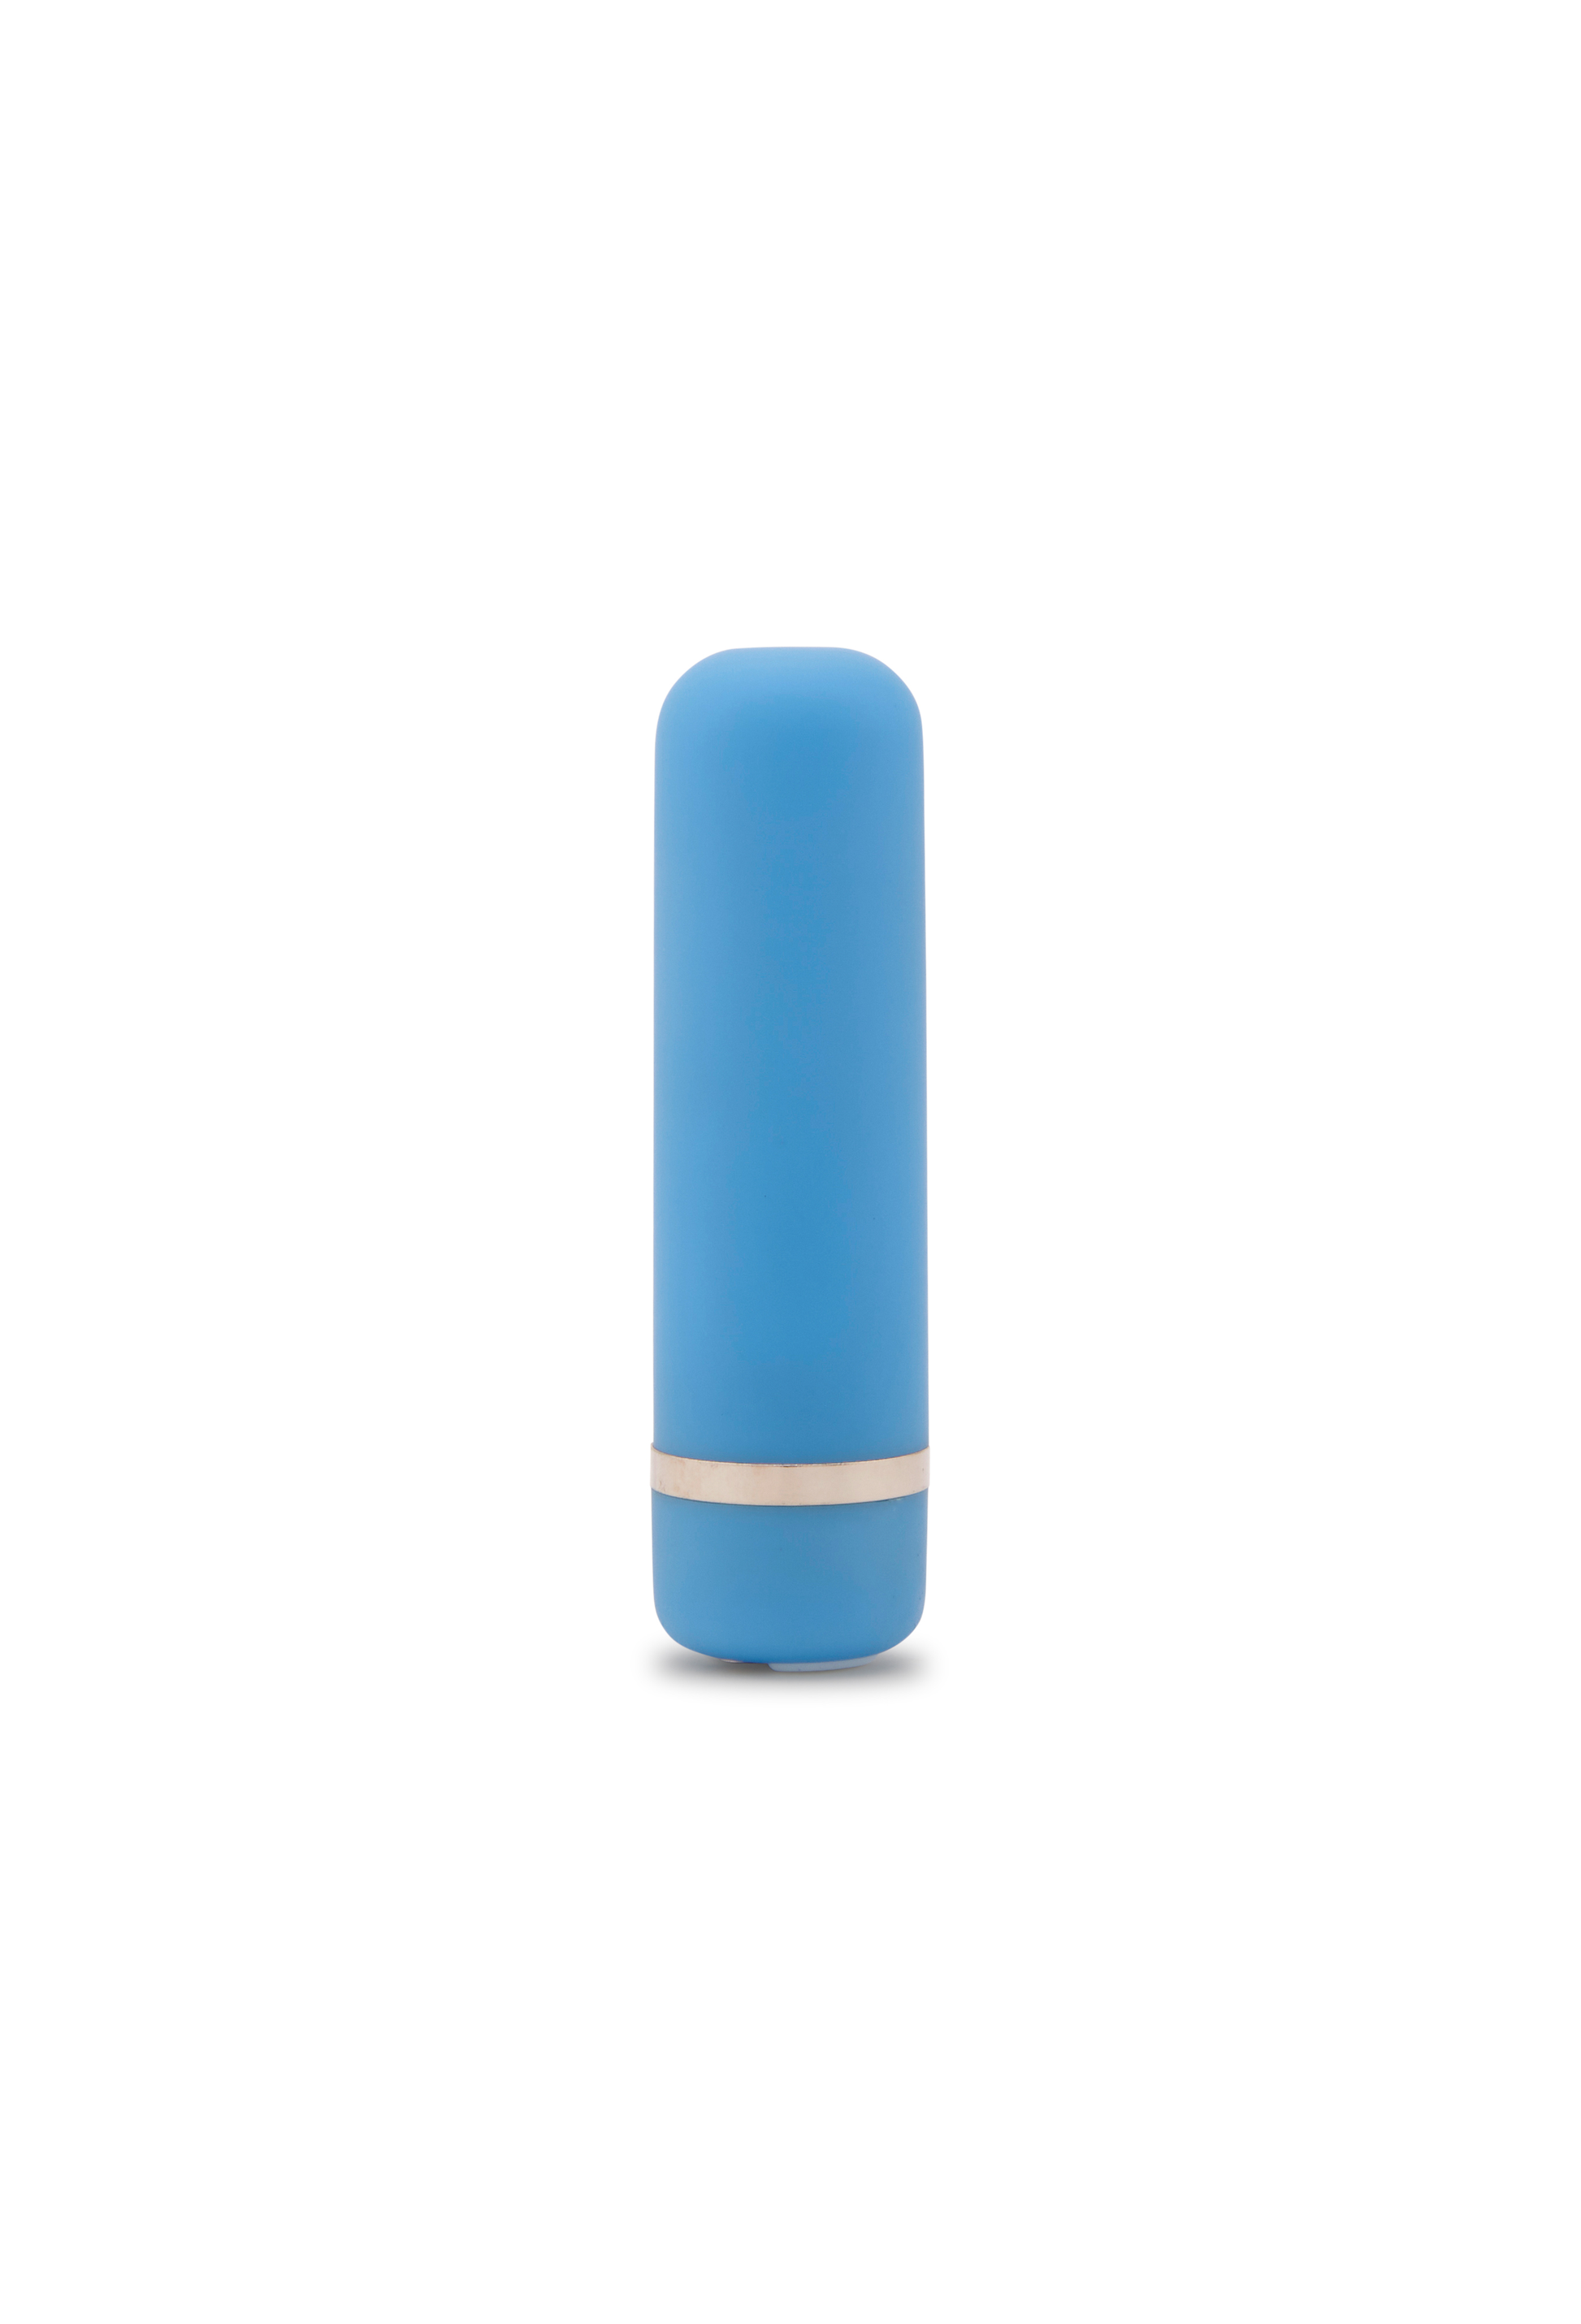 Nu Sensuelle Joie Rechargeable Blue Bullet Vibrator - XOXTOYS